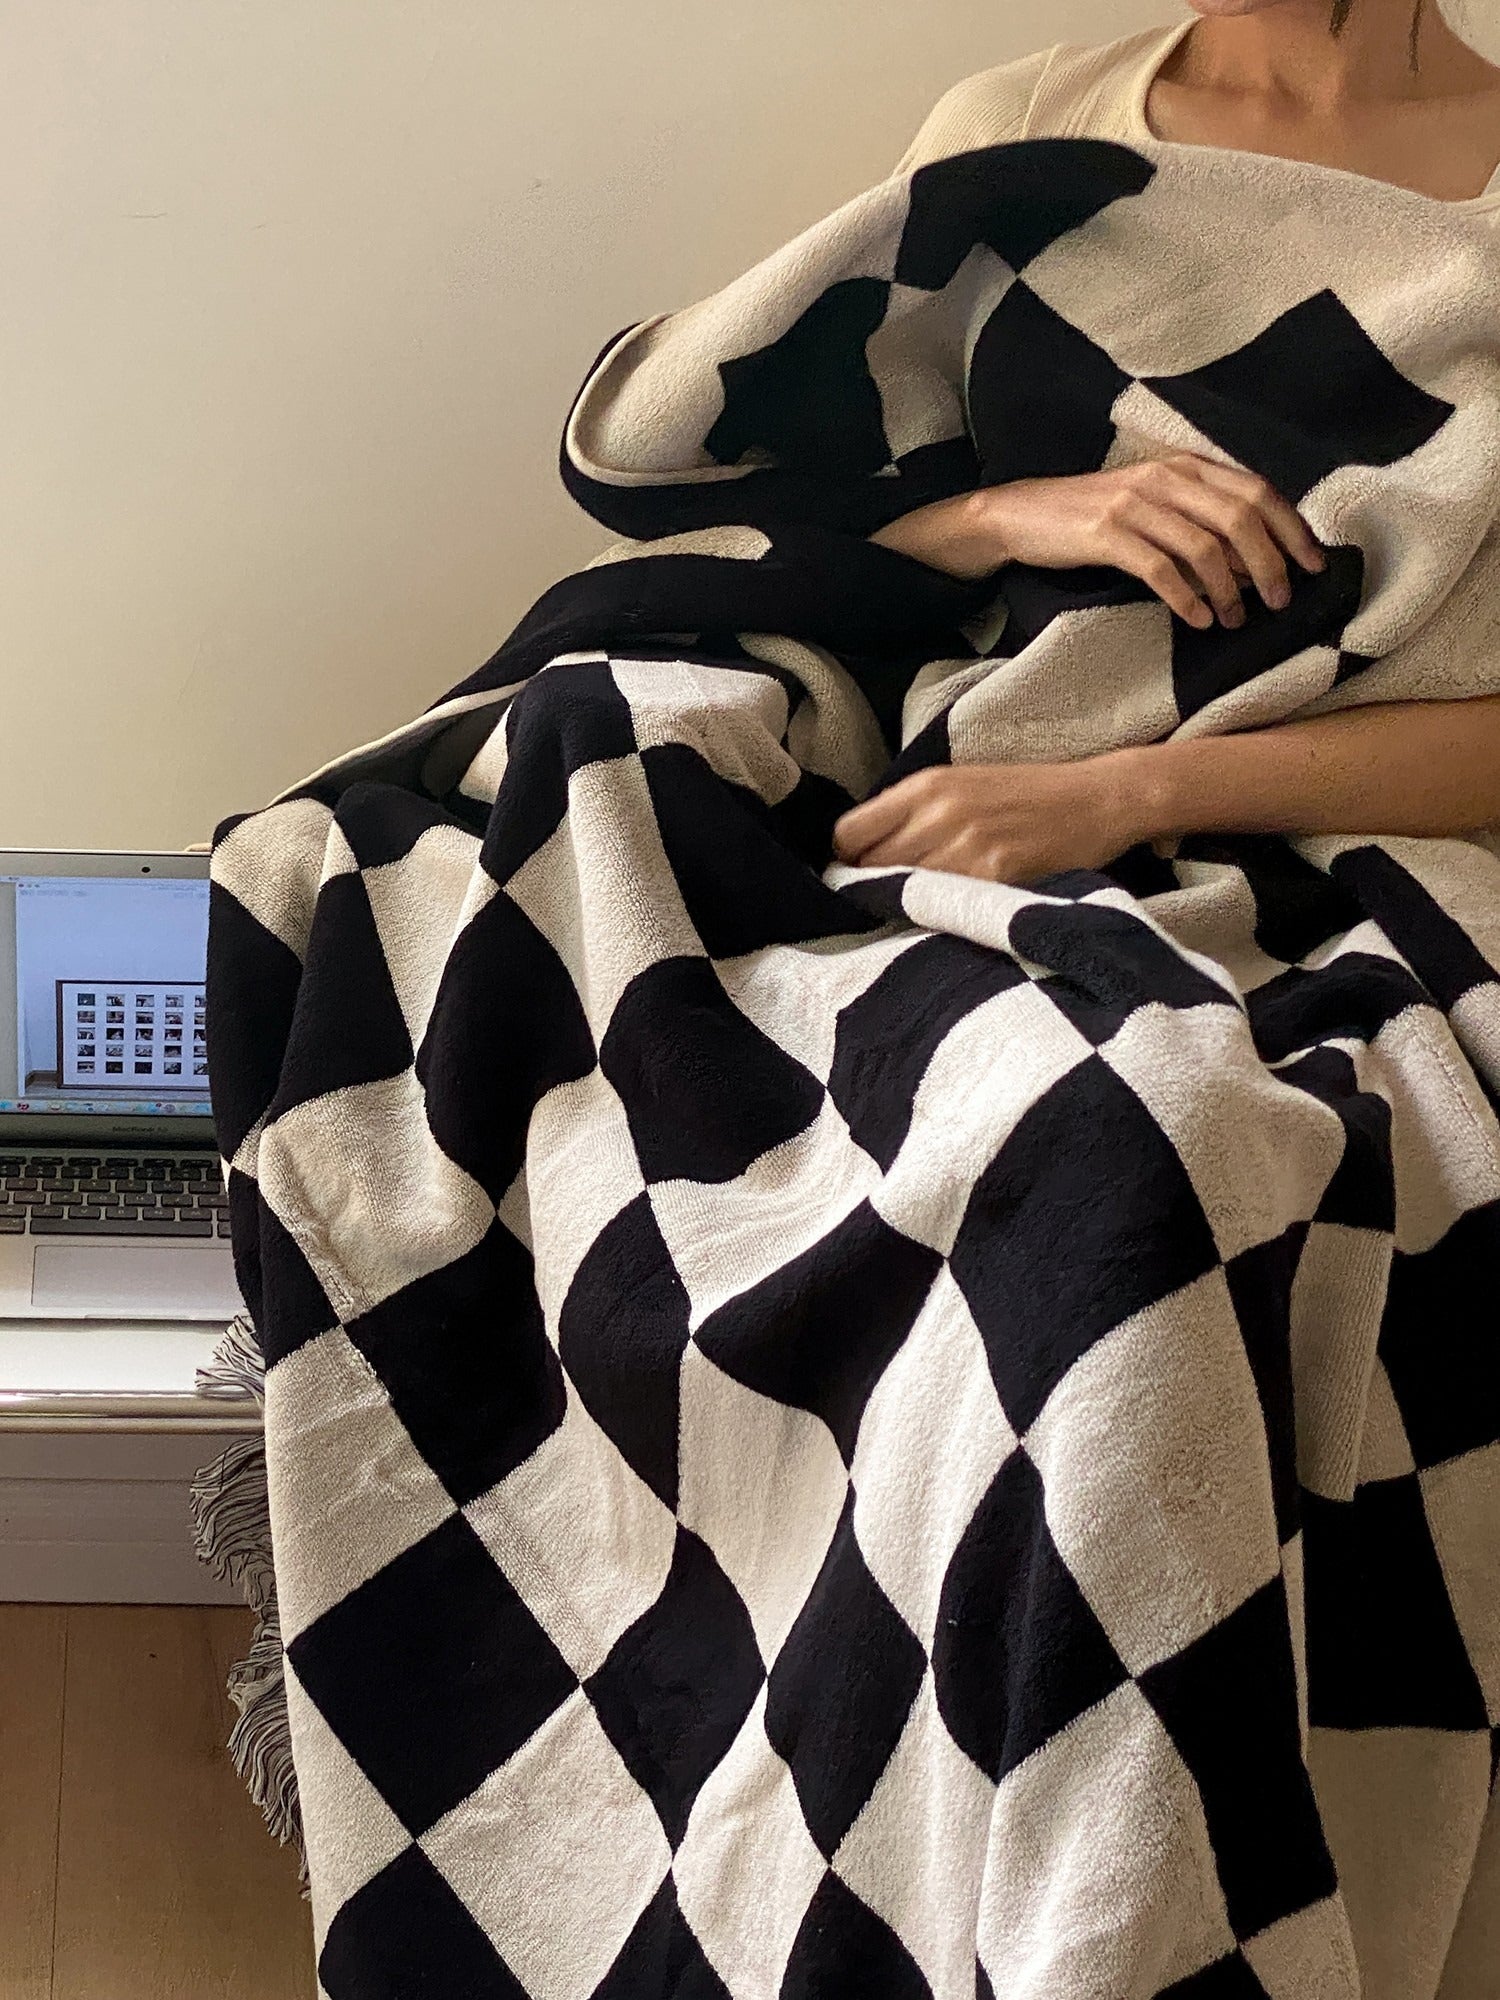 Checkered Nap Blanket